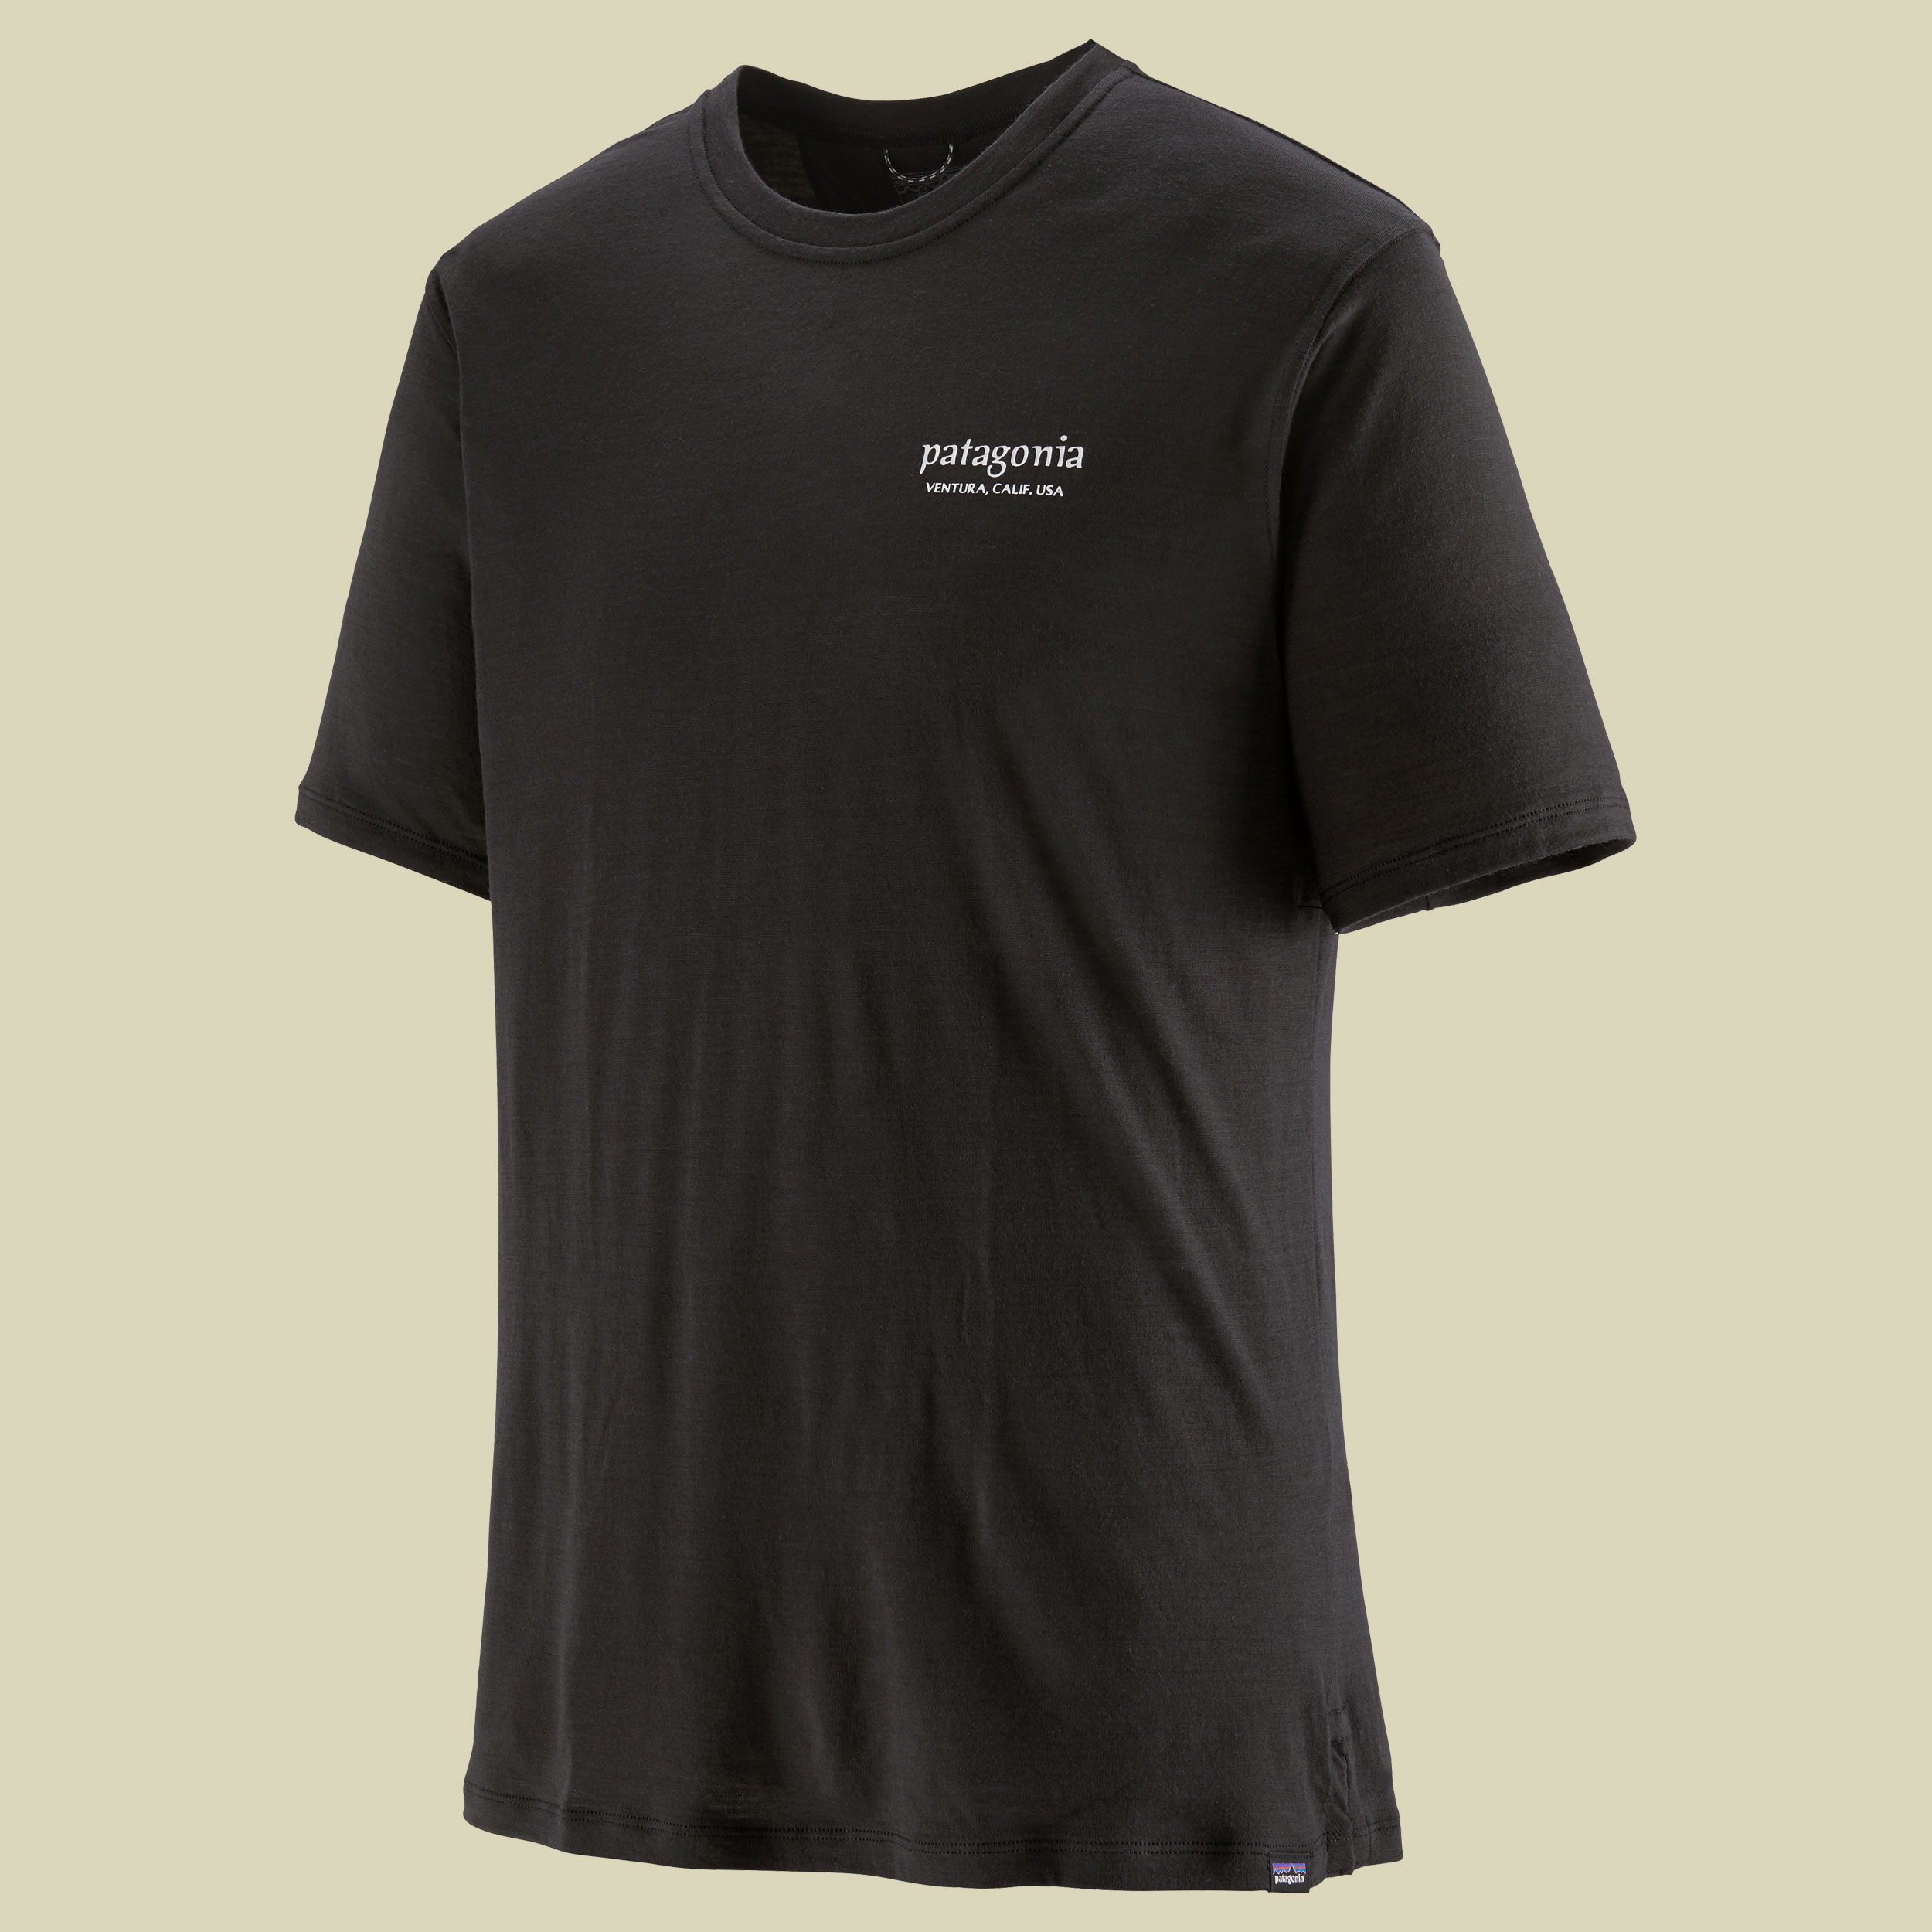 Cap Cool Merino Blend Graphic Shirt Men M schwarz - heritage header:black